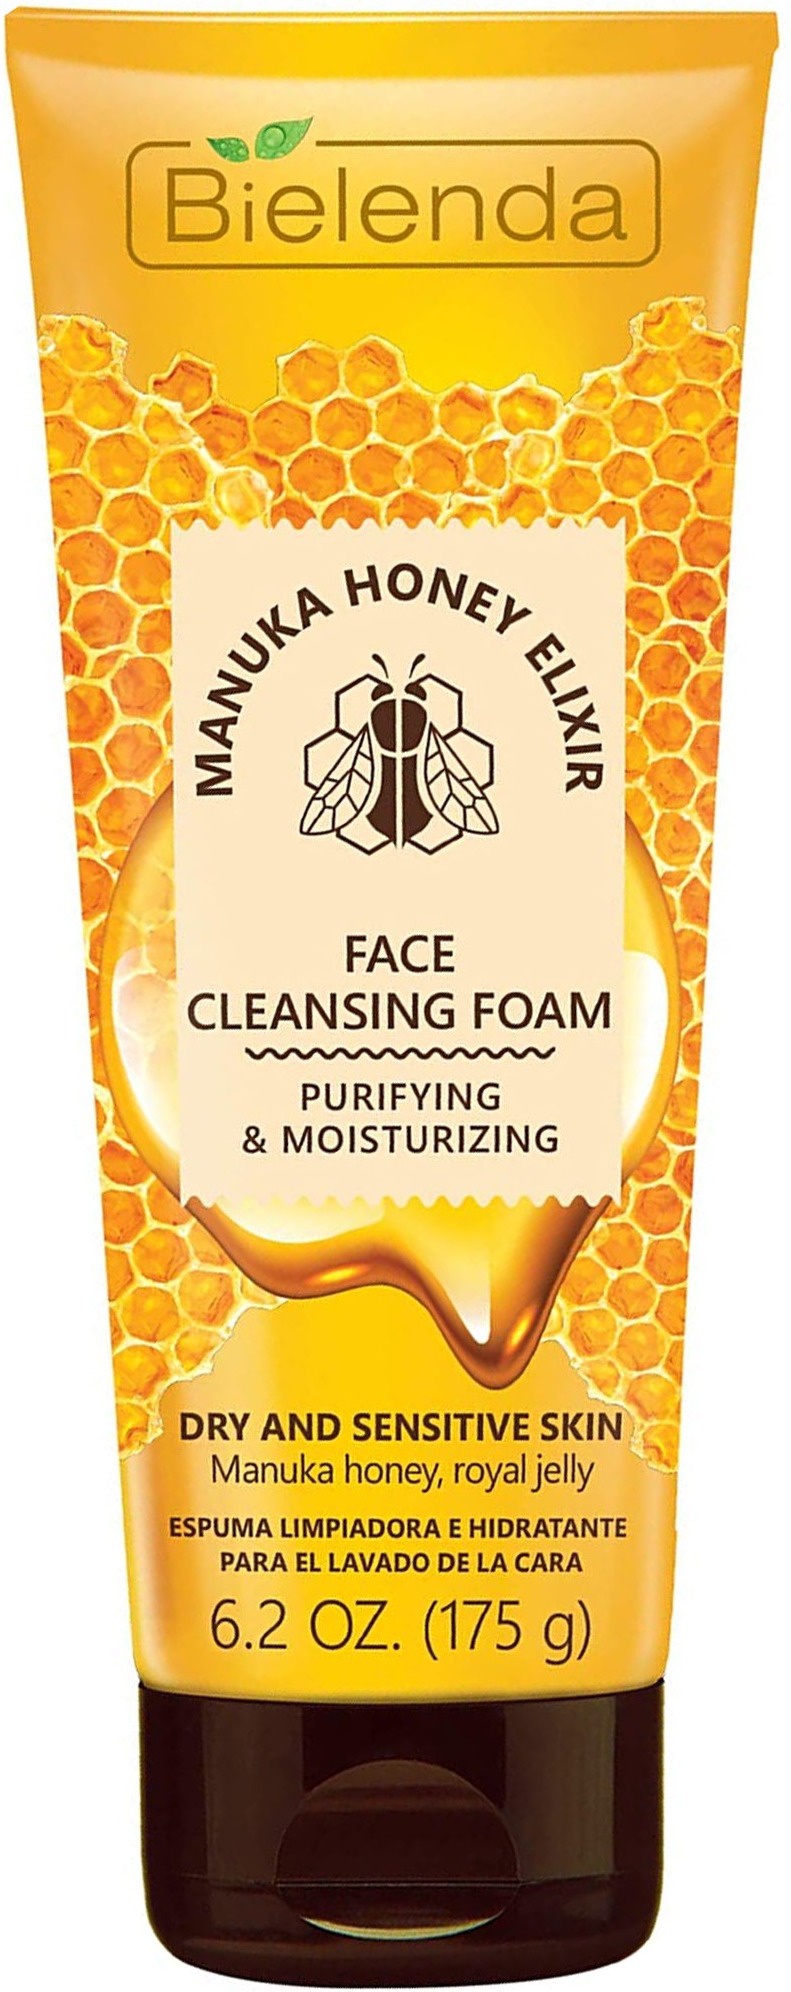 Bielenda Manuka Honey Elixir Face Cleansing Foam